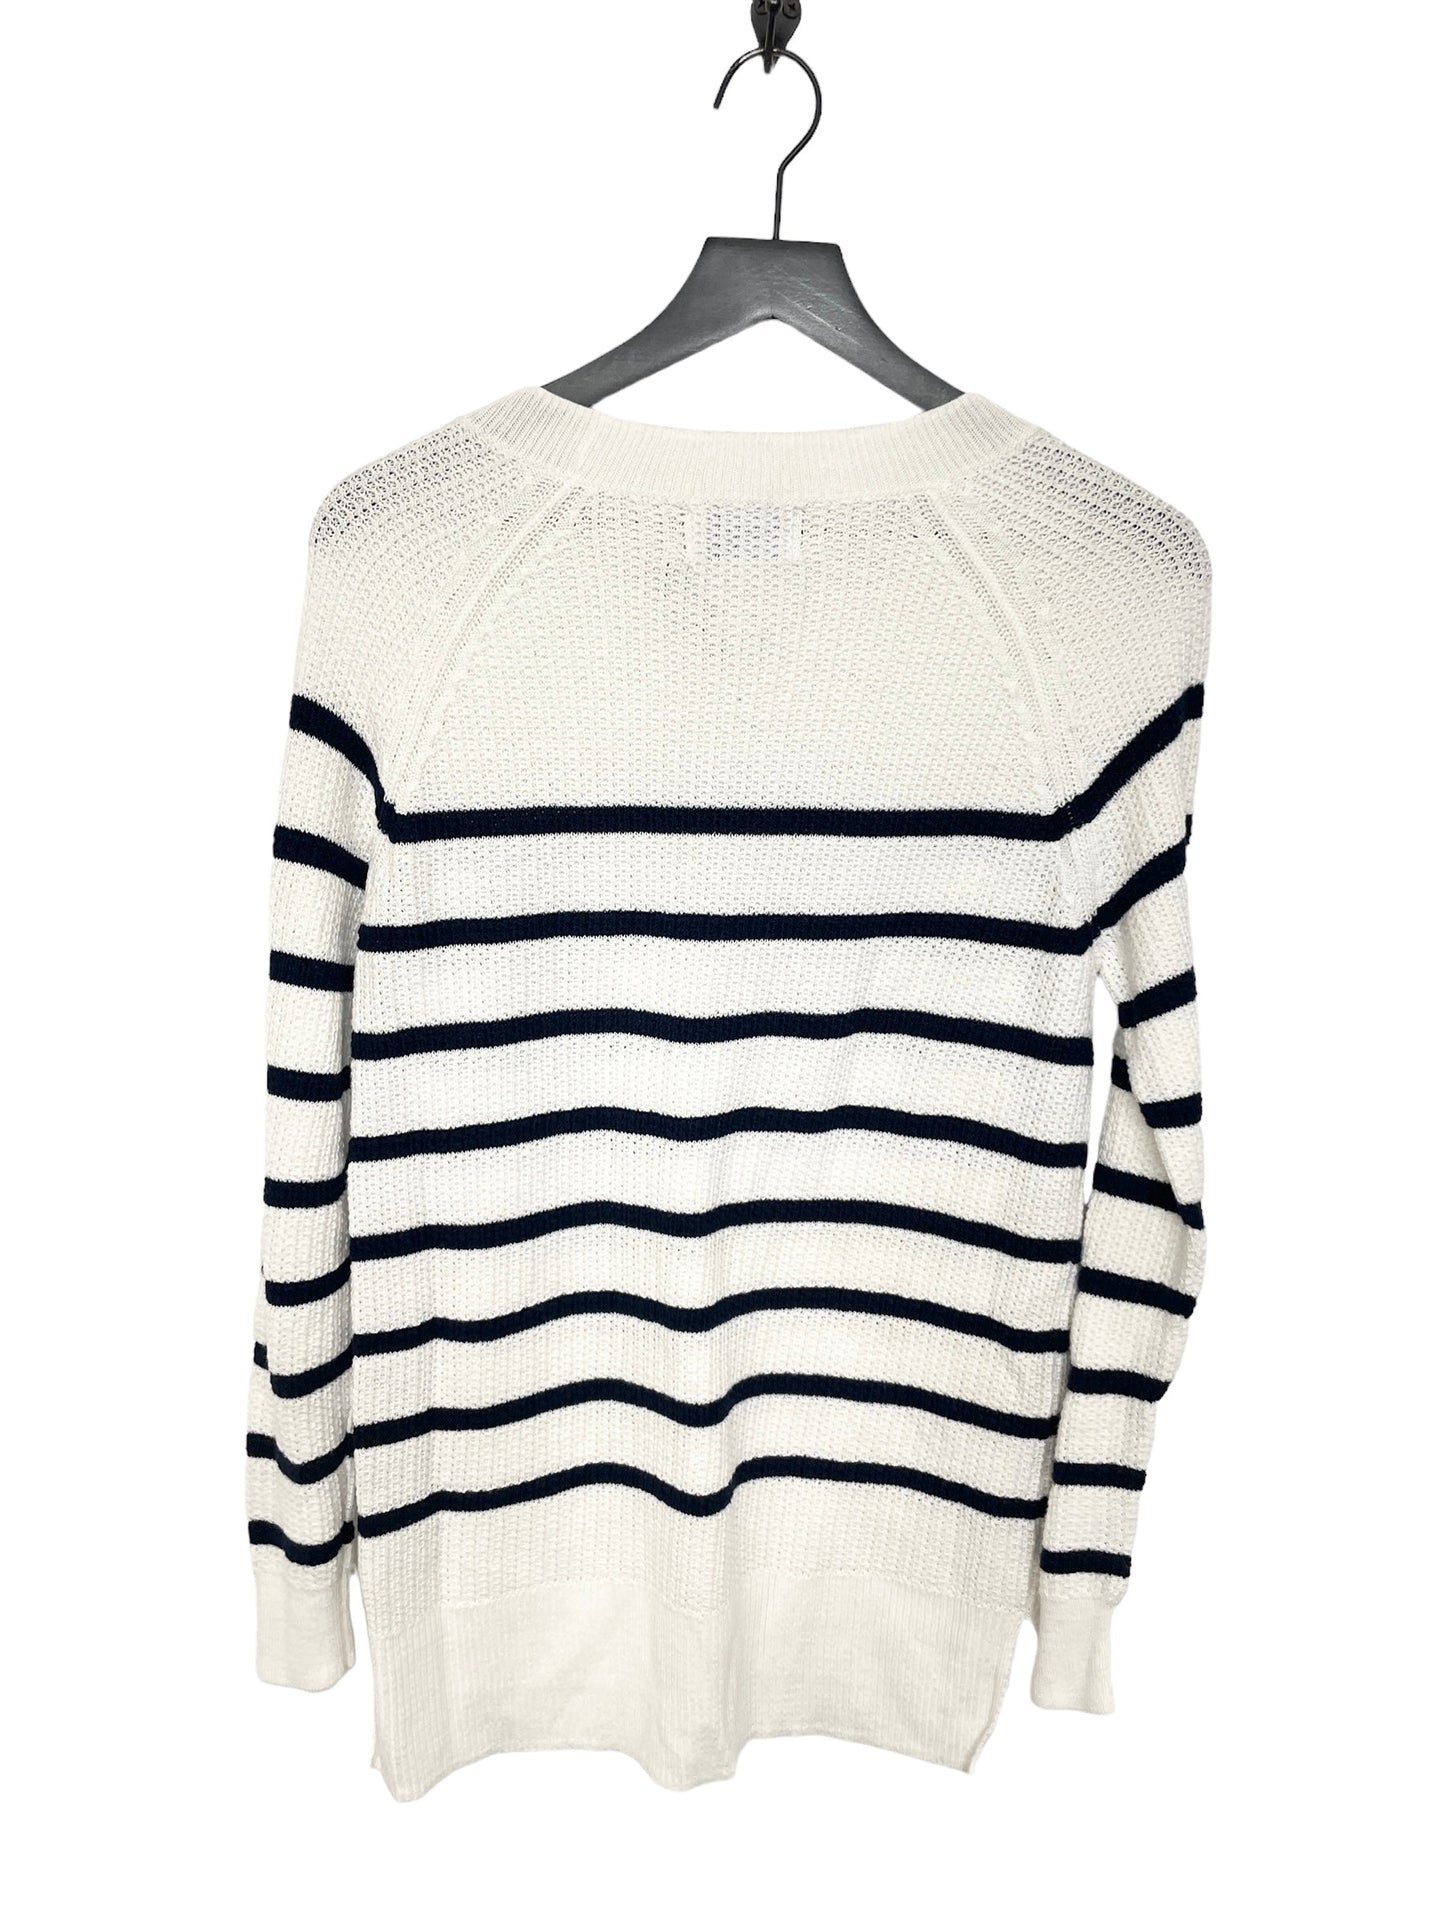 Striped Pattern Sweater Old Navy, Size M